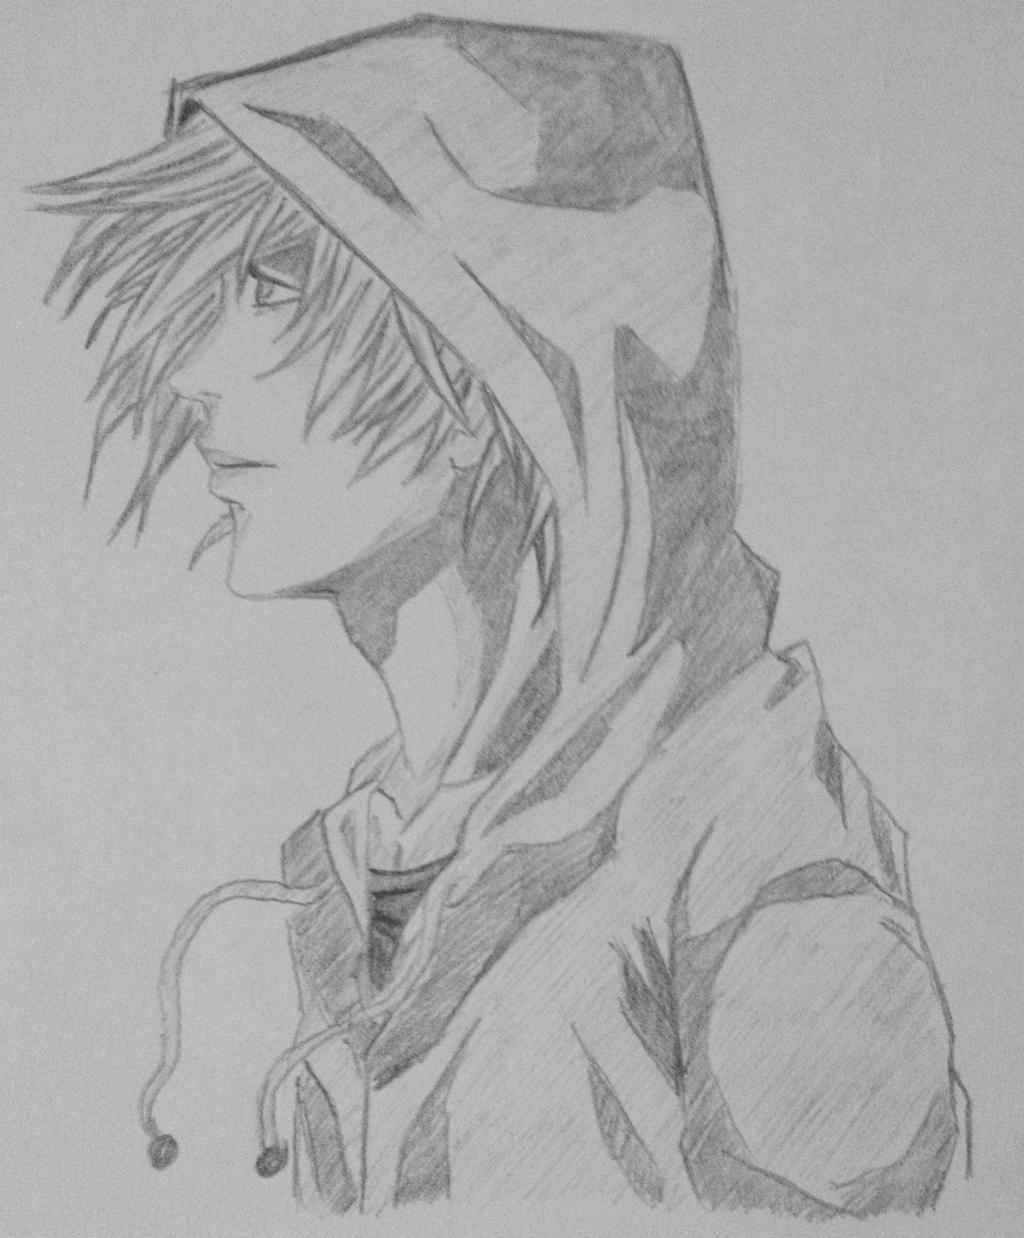 Side view hooded guy anime by Pokelantislv9999 on DeviantArt